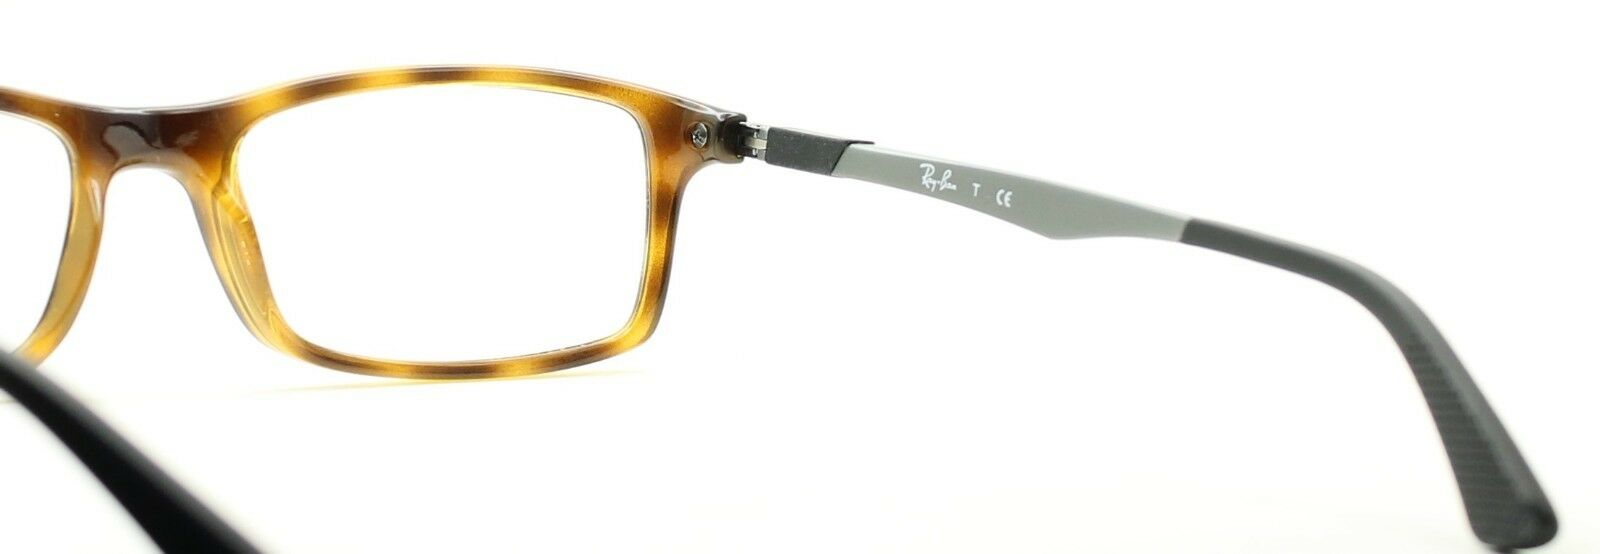 RAY BAN RB 7017 5687 FRAMES RAYBAN Glasses Eyewear RX Optical Eyeglasses - New